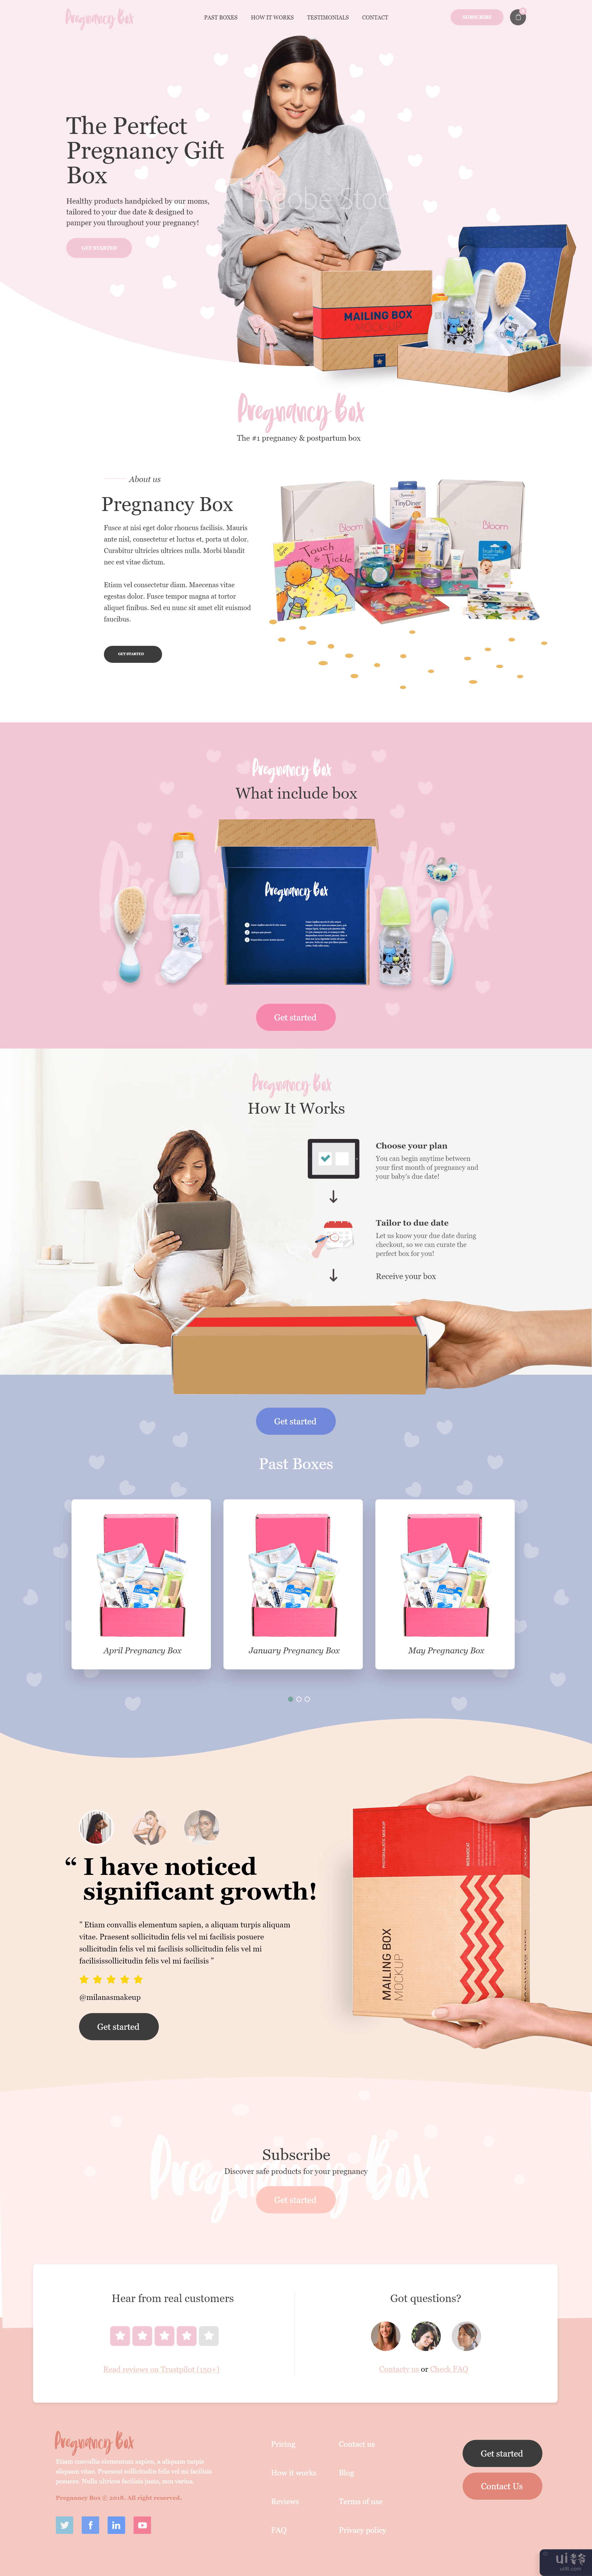 怀孕箱订阅登陆页面概念(Pregnancy Box Subscription Landing Page Concept)插图